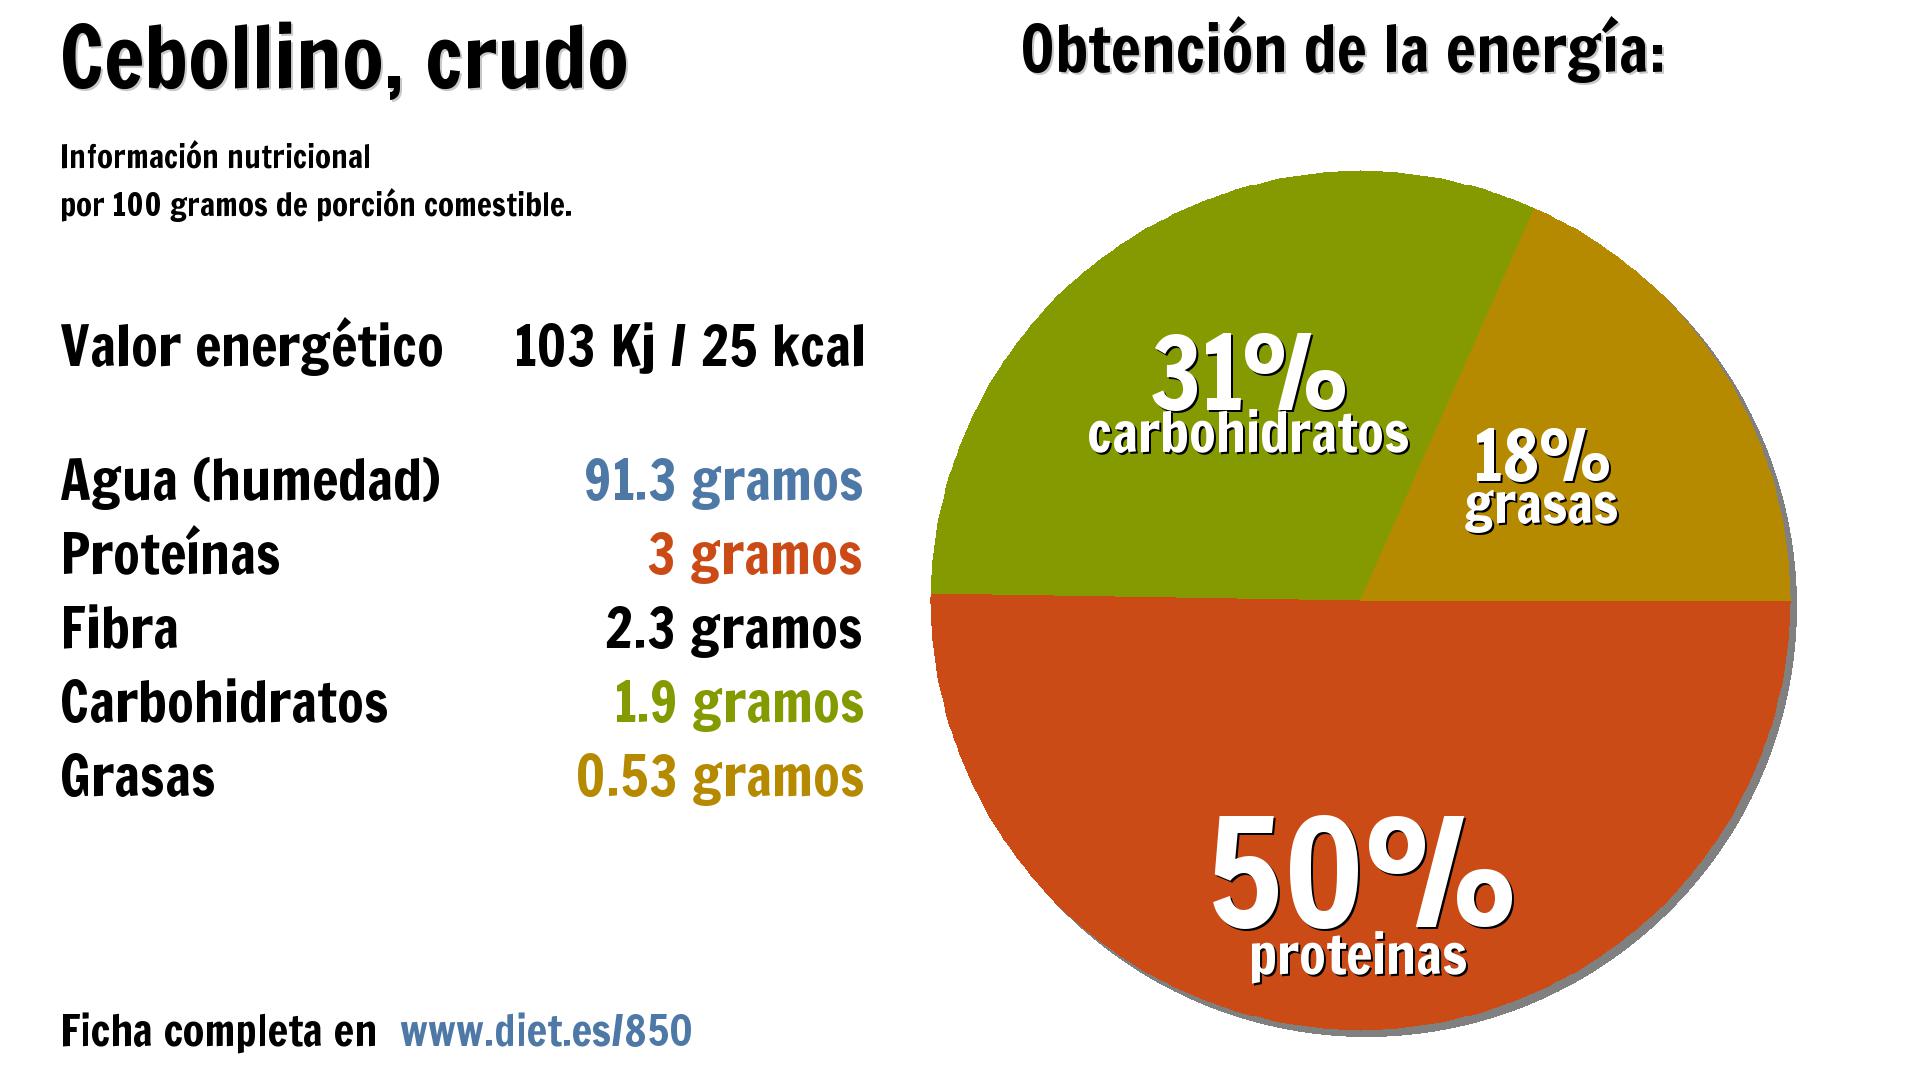 Cebollino, crudo: energía 103 Kj, agua 91 g., proteínas 3 g., fibra 2 g., carbohidratos 2 g. y grasas 1 g.